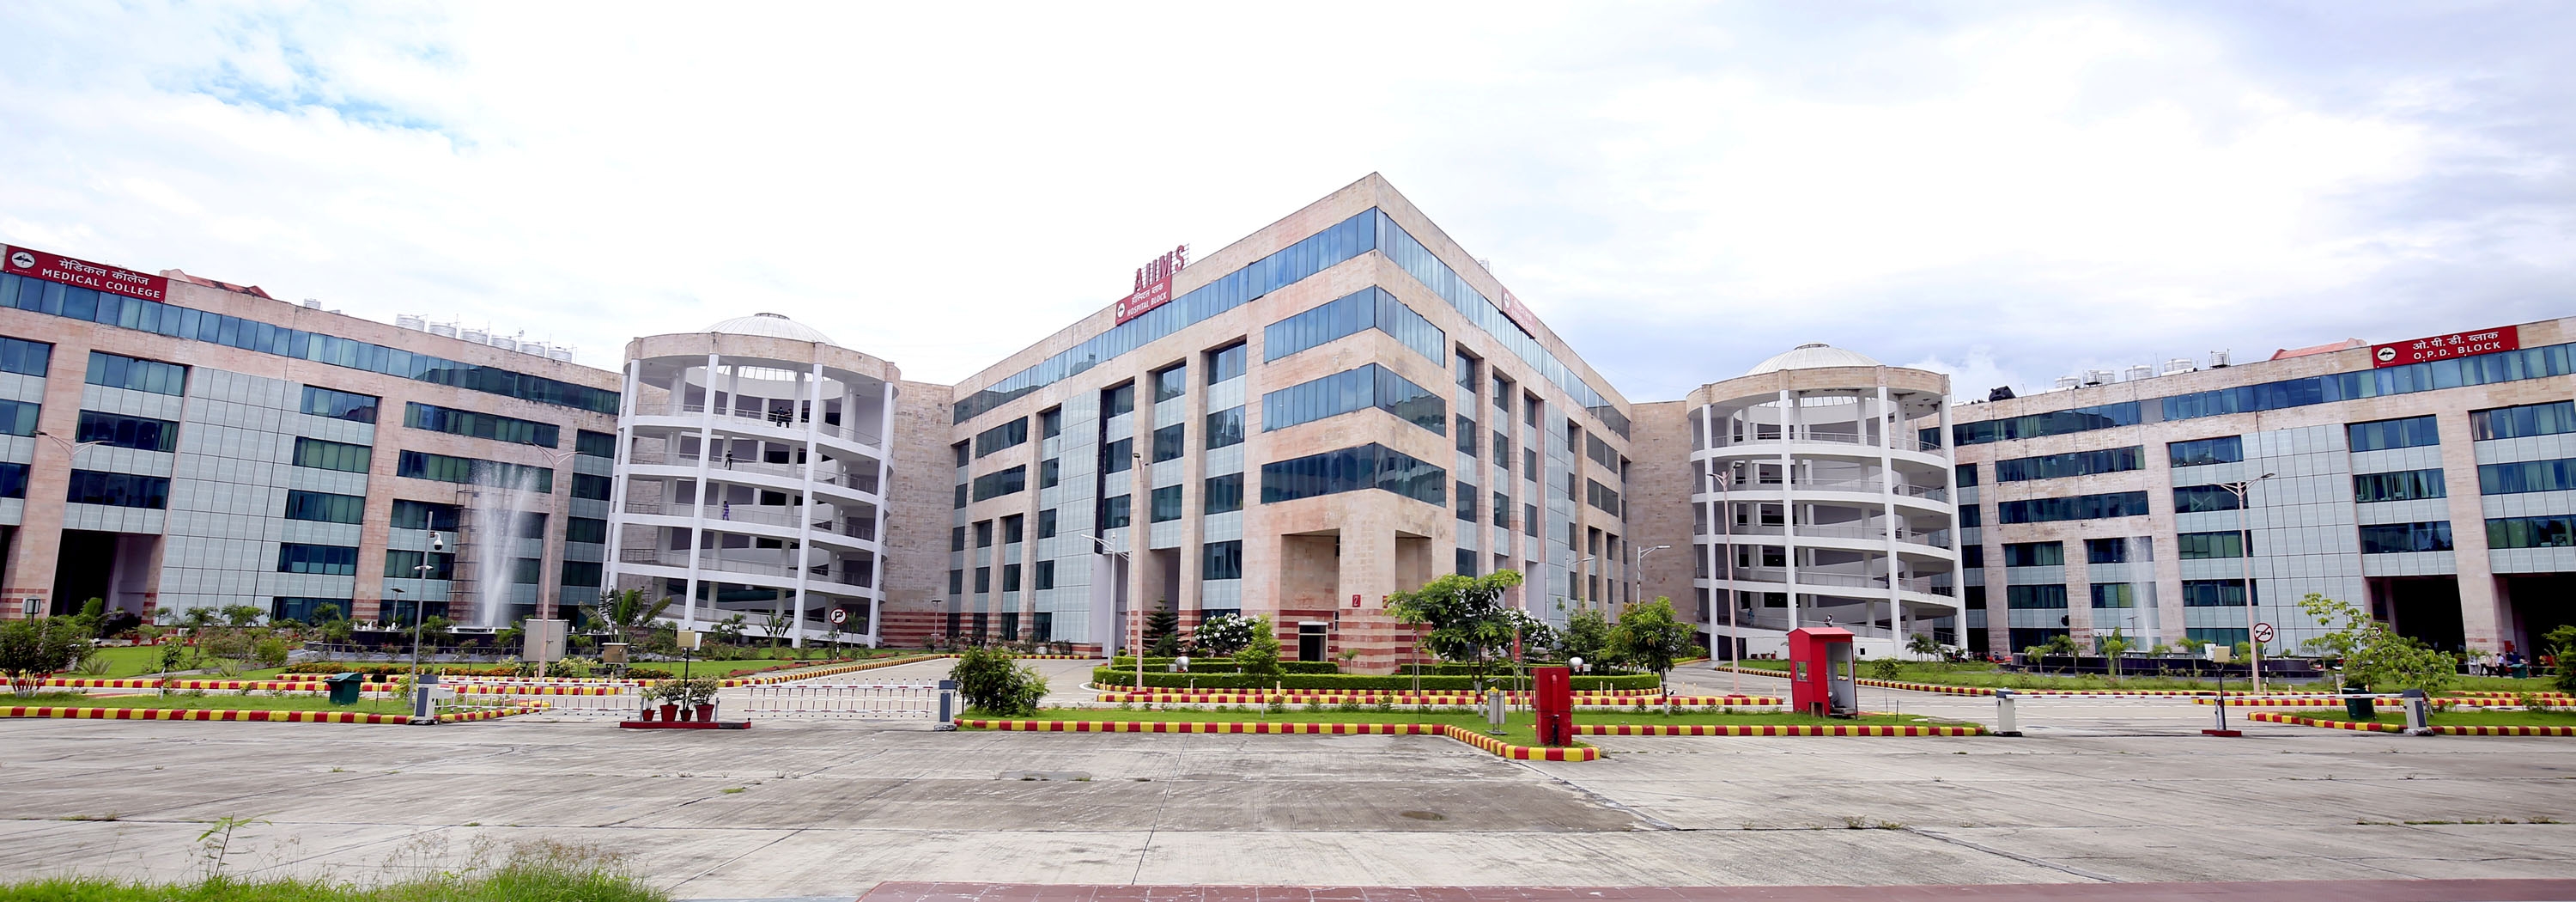 All India Institute of Medical Sciences, Rishikesh Image